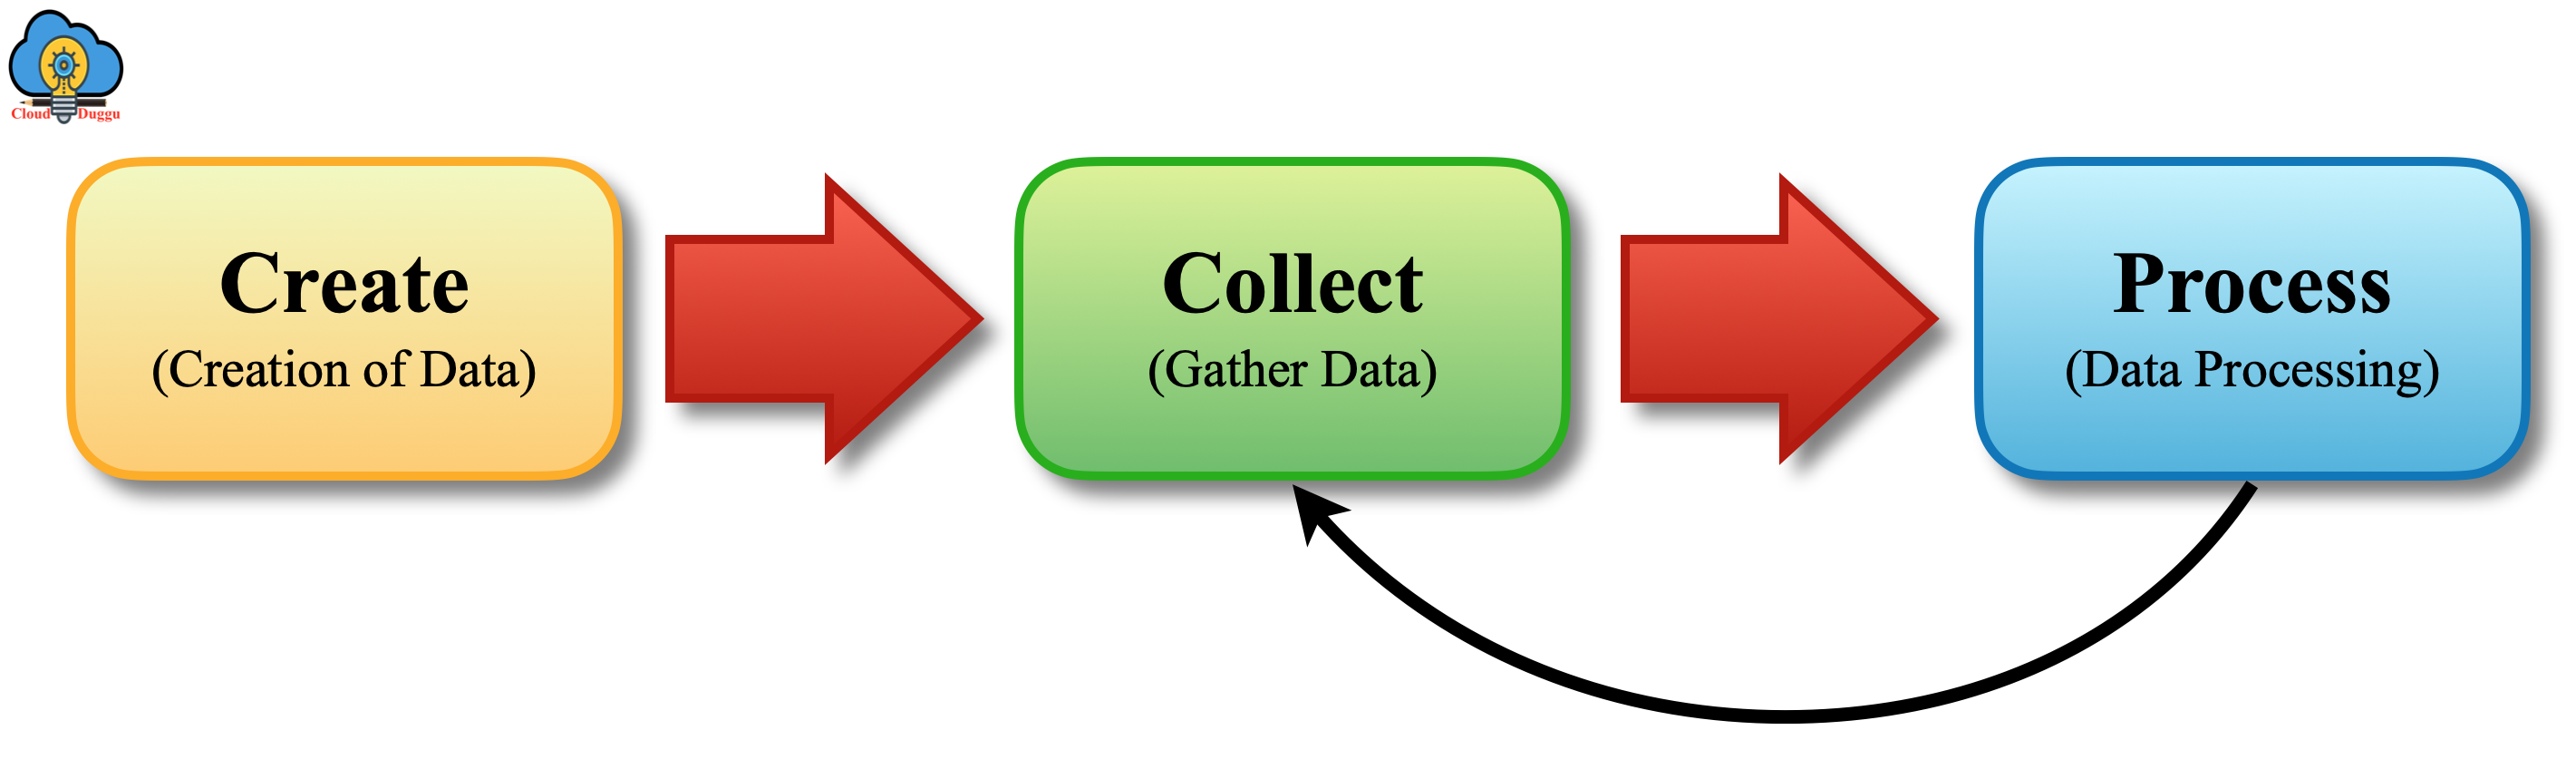 data stream life cycle